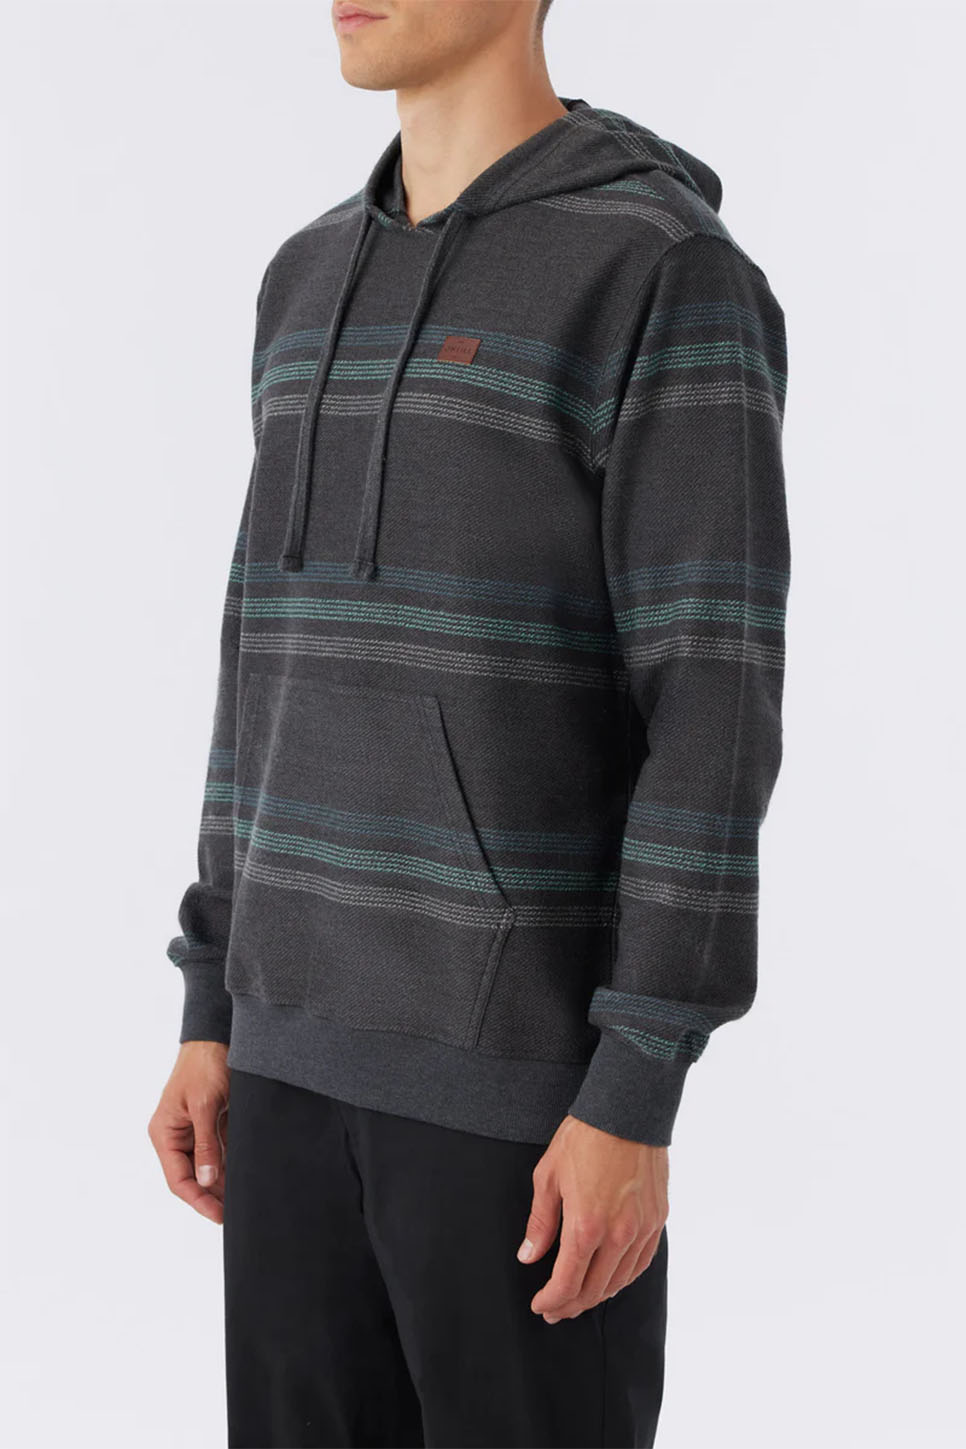 O'Neill - Bavaro Striped Pullover - Black 2 - Side